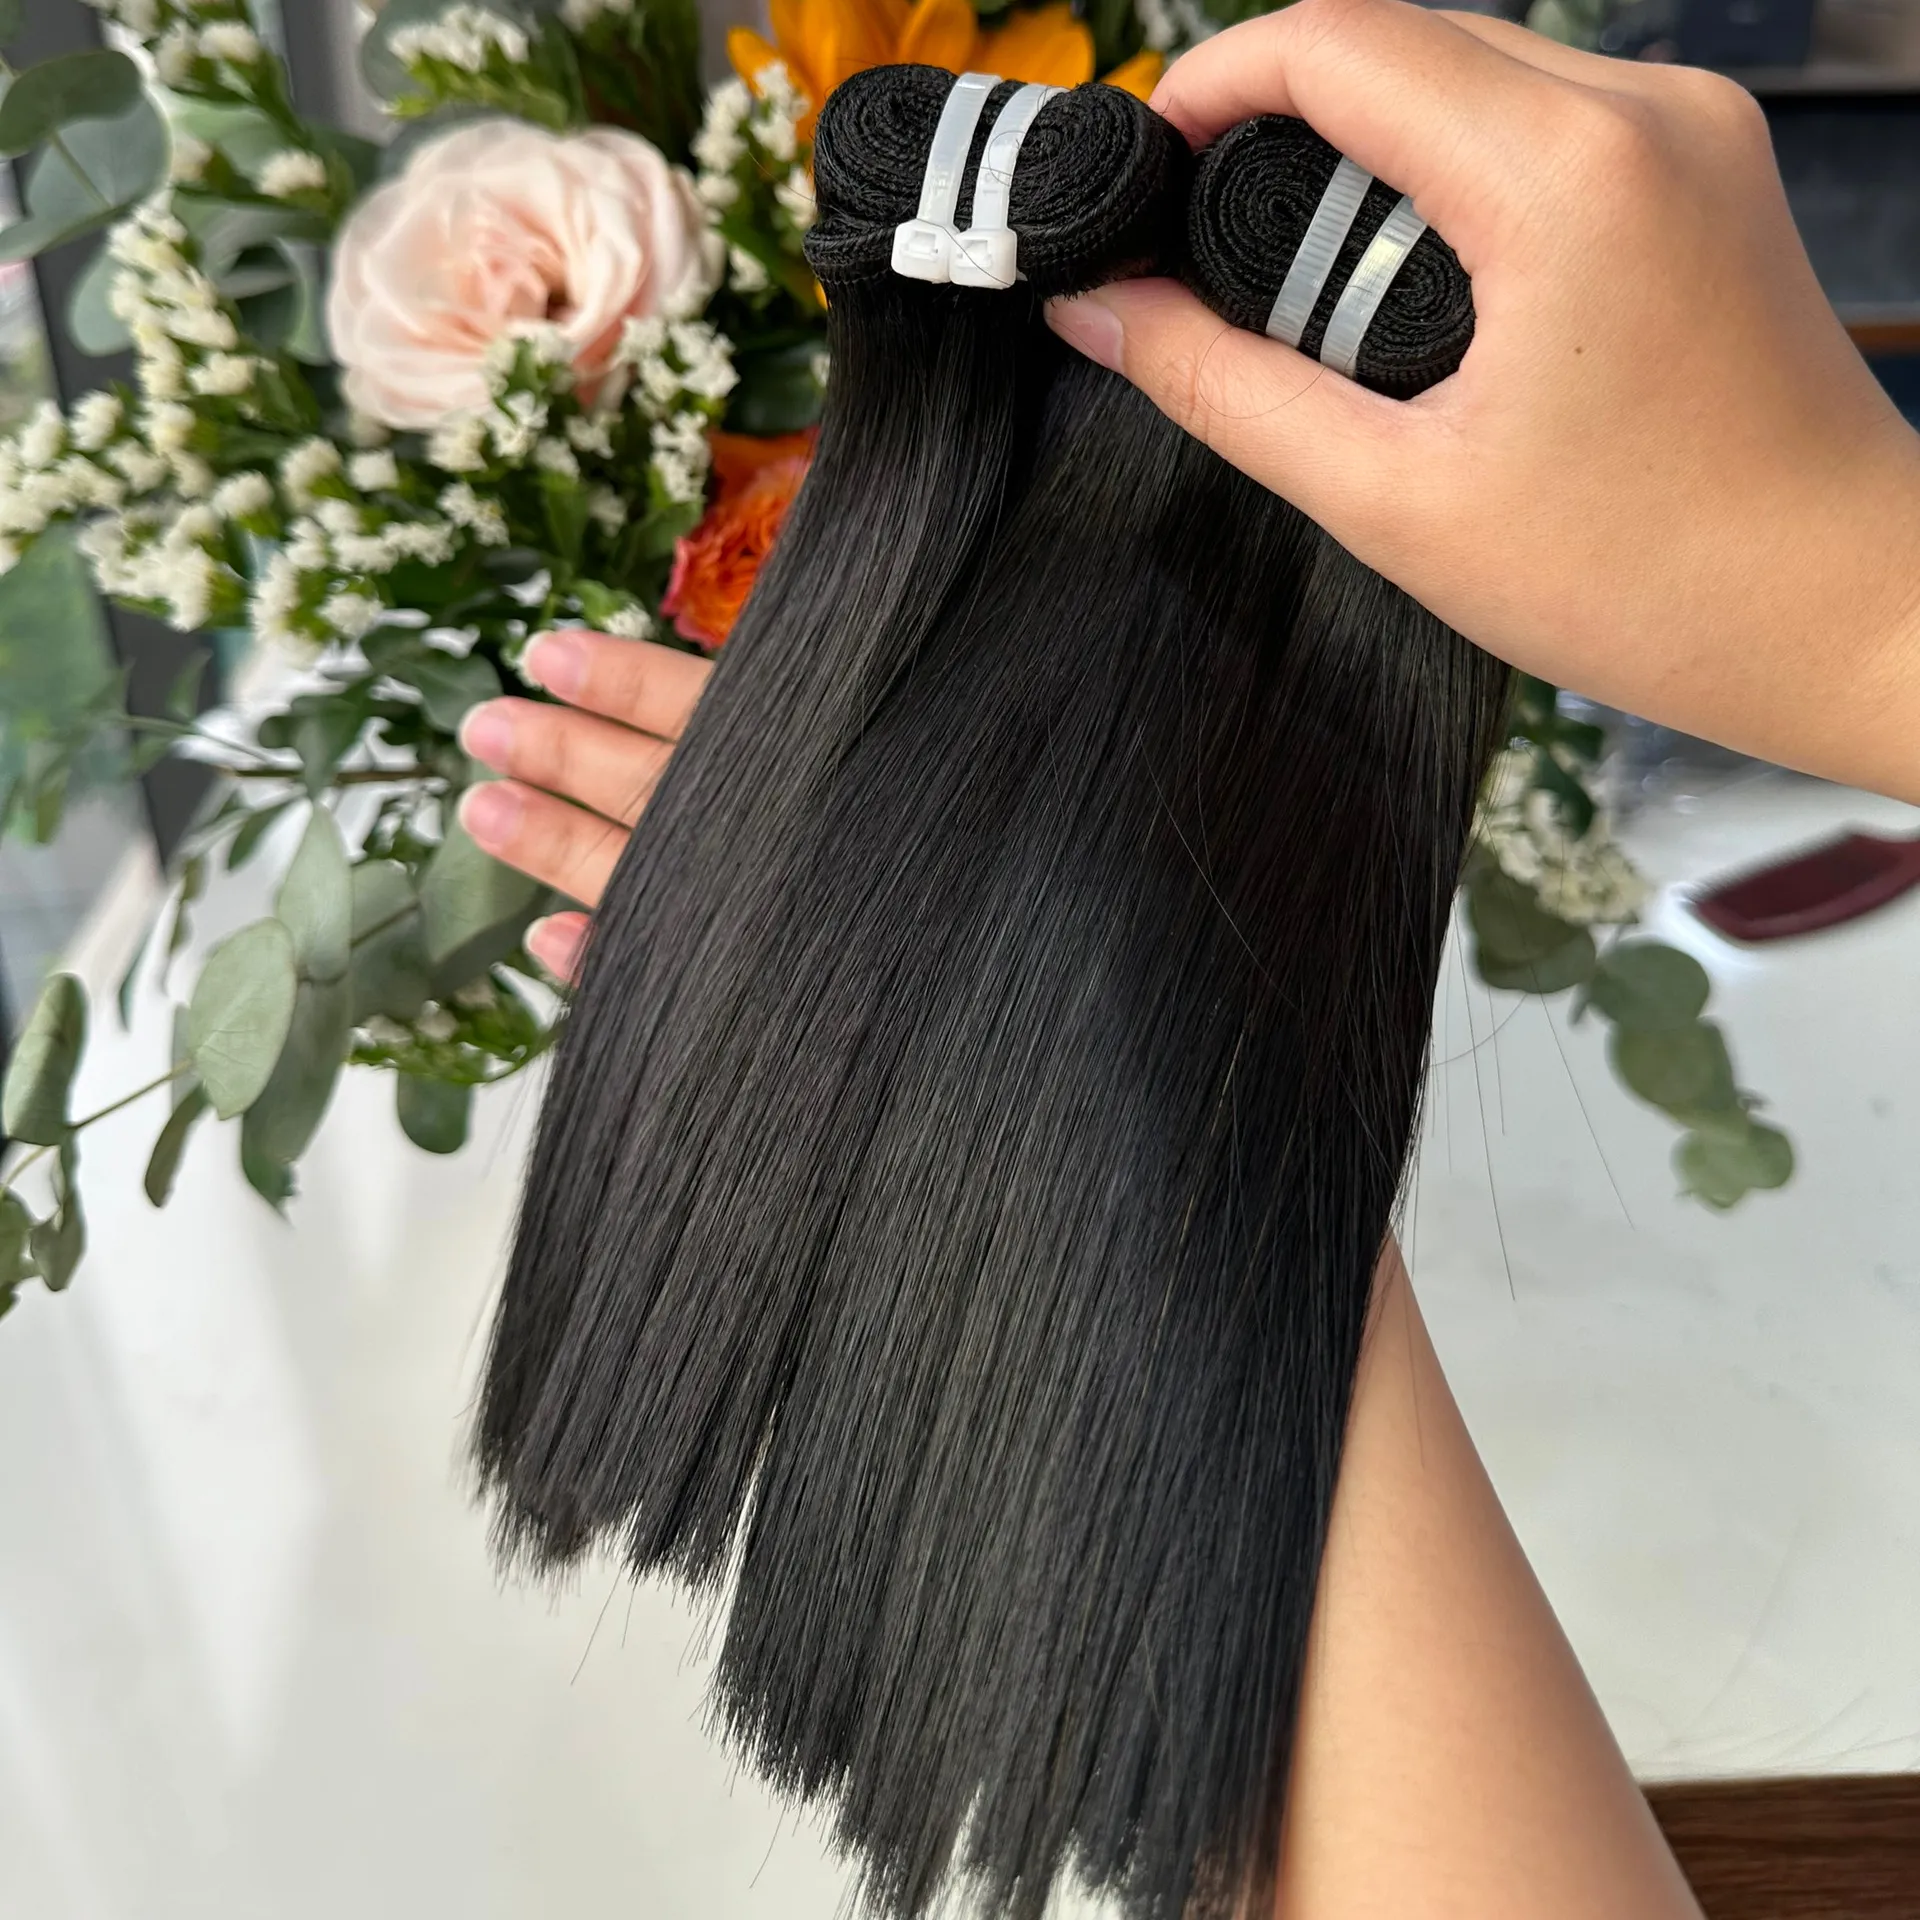 Estensioni di capelli umani naturali di alta qualità capelli di trama lisci capelli retini crudi vietnamiti grezzi dal produttore del Vietnam